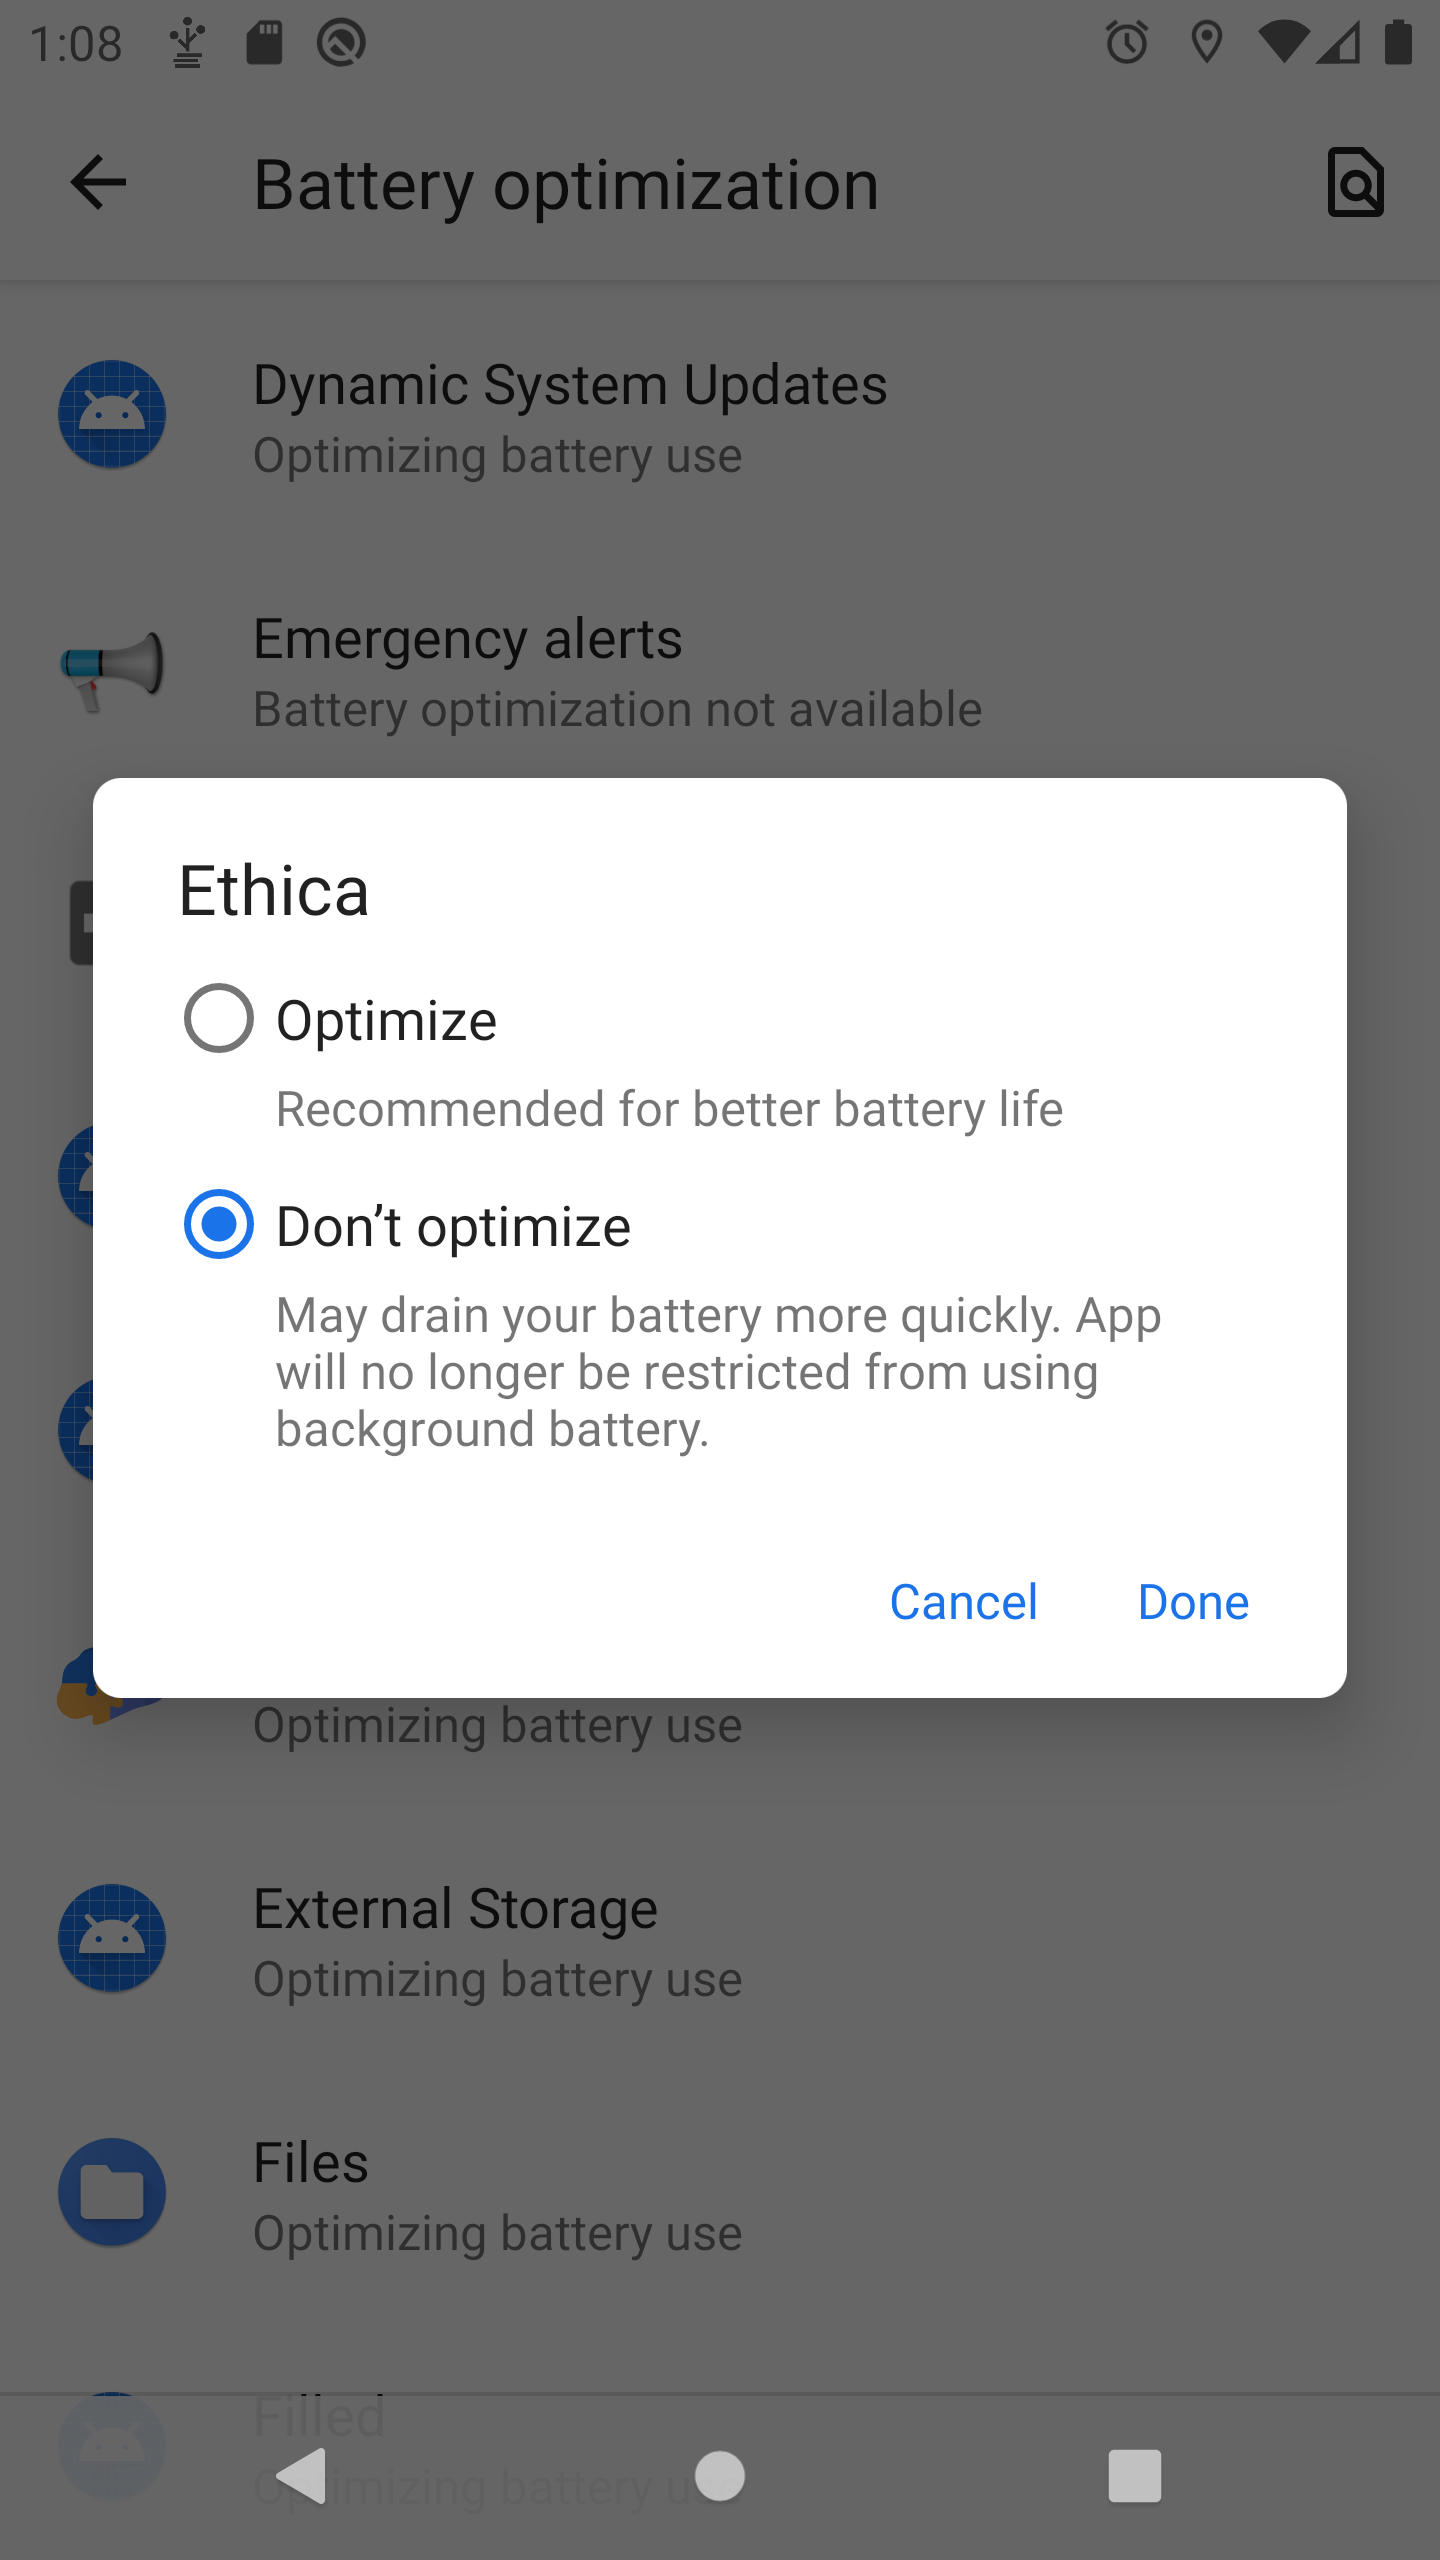 Battery Optimization screen - Dont Optimize option